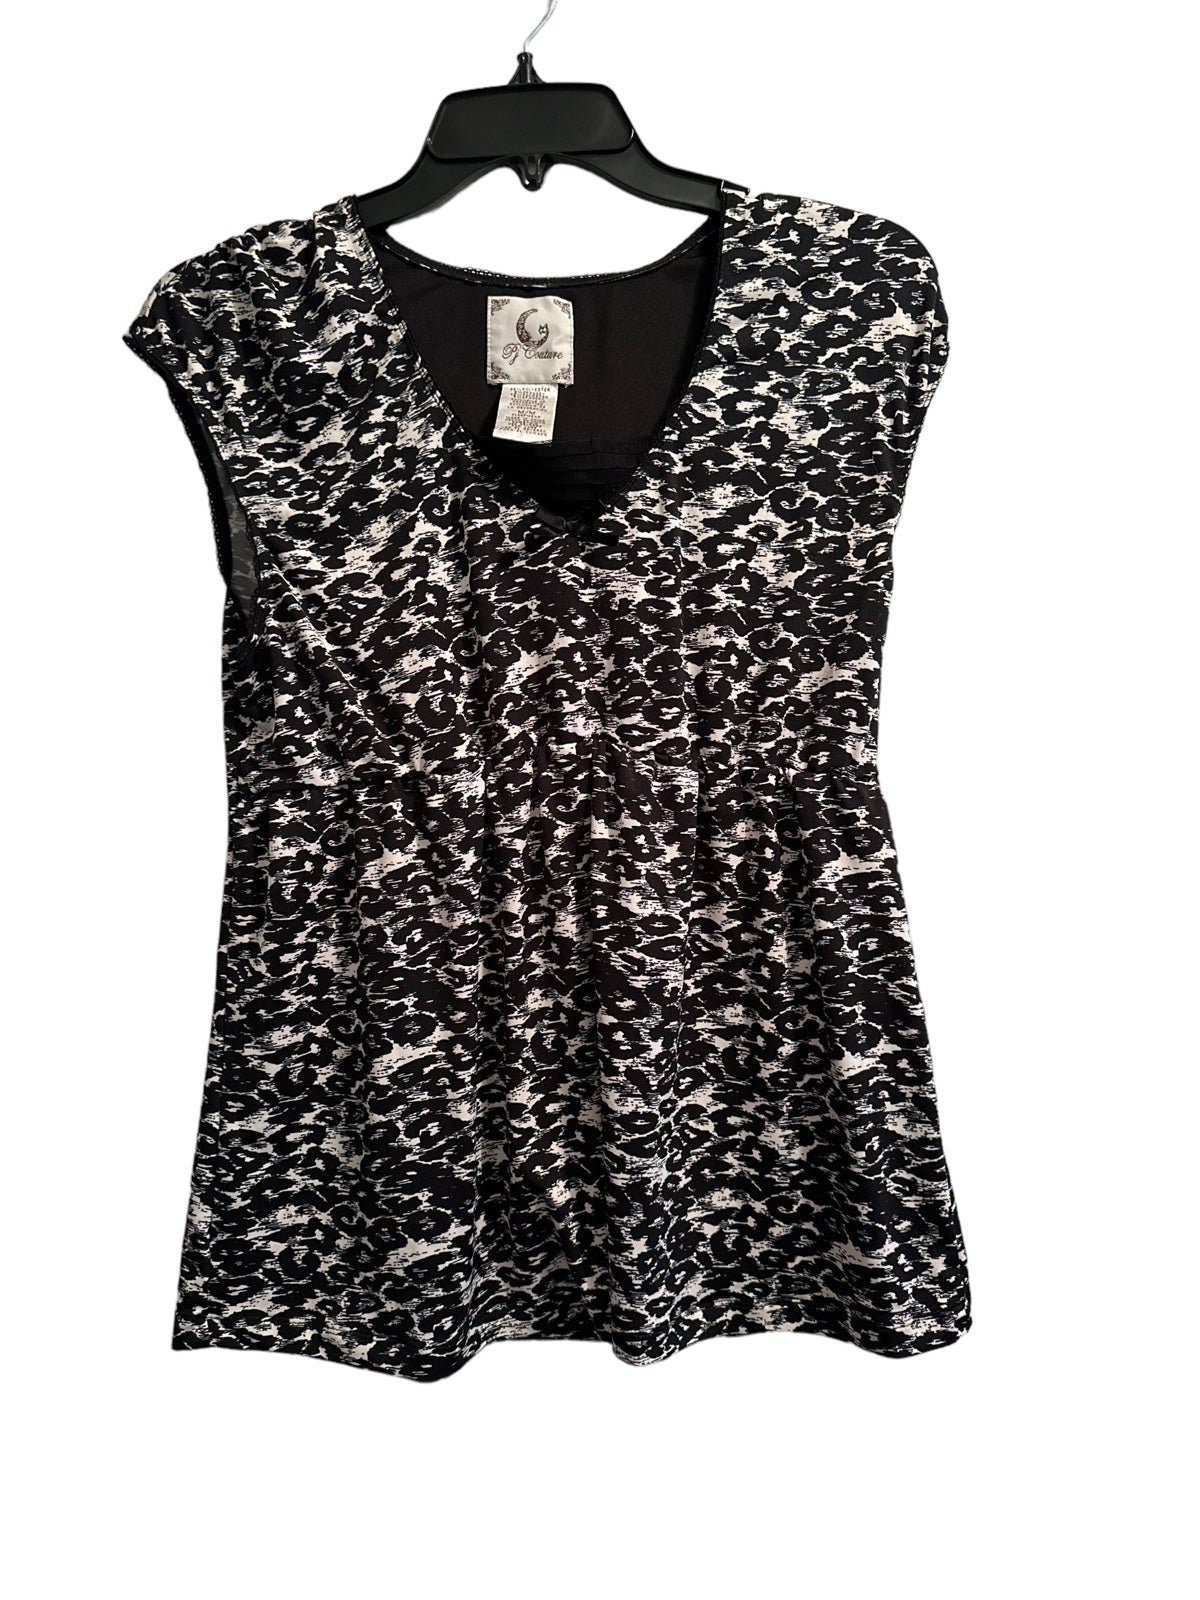 PJ Couture Women’s Short Sleeve Summer Top, Black & White, Medium CPru6ybBO